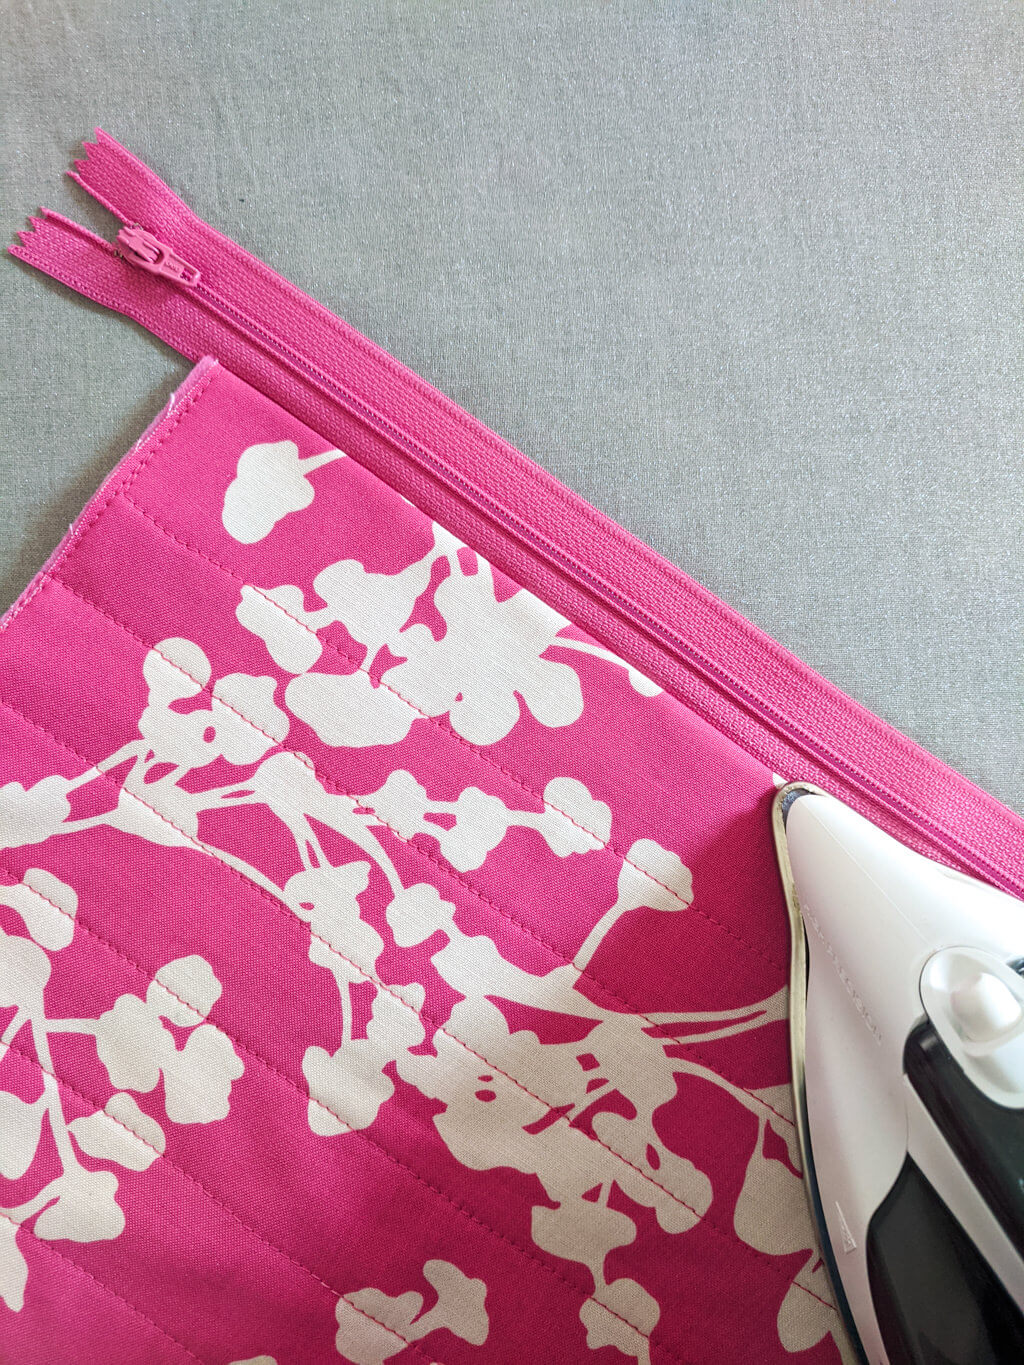 Ironing fabric zipper pouch